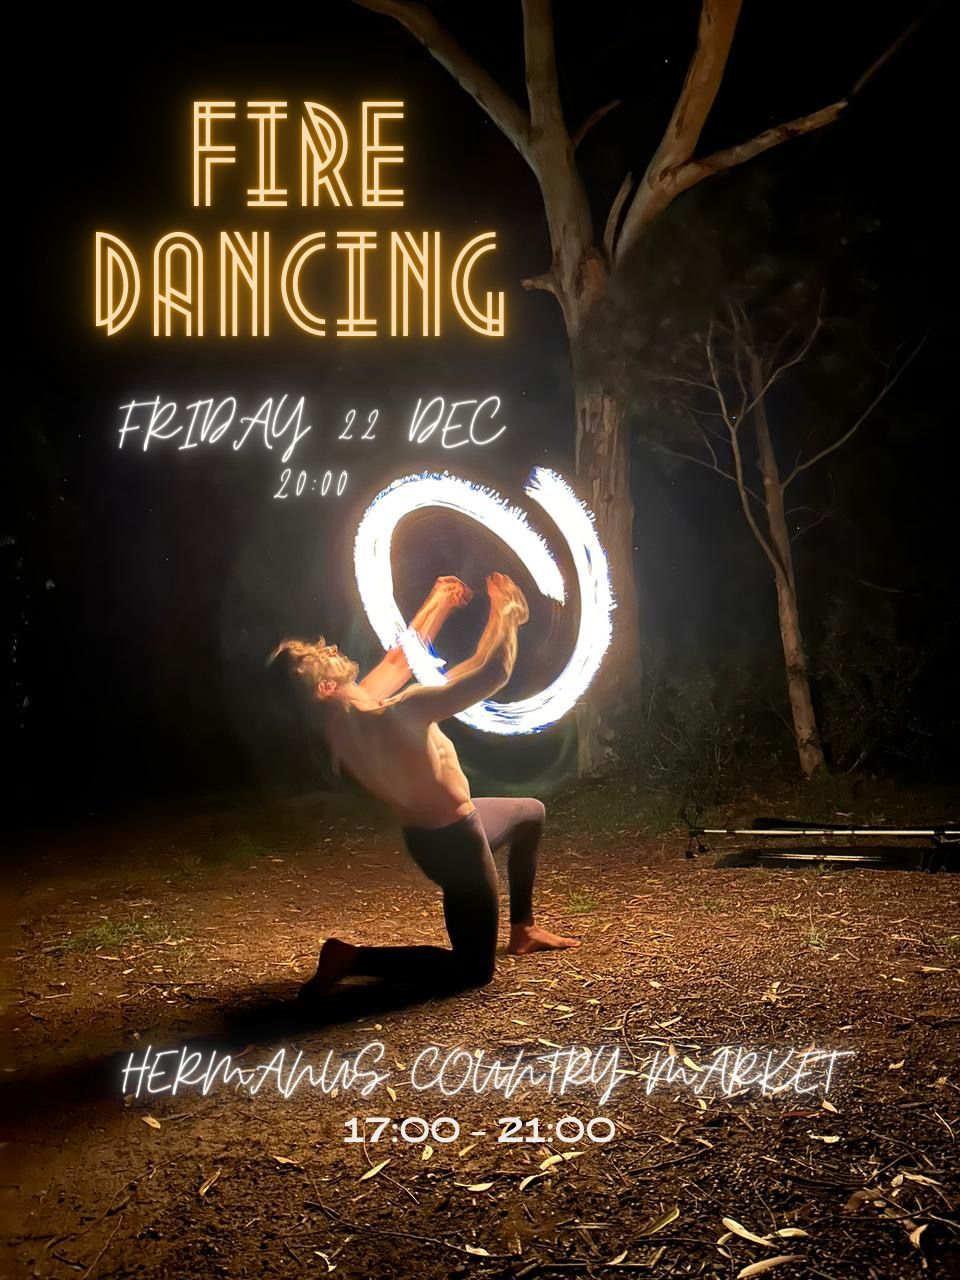 Fire dancing Hermanus Country Market 8pm 22nd Dec